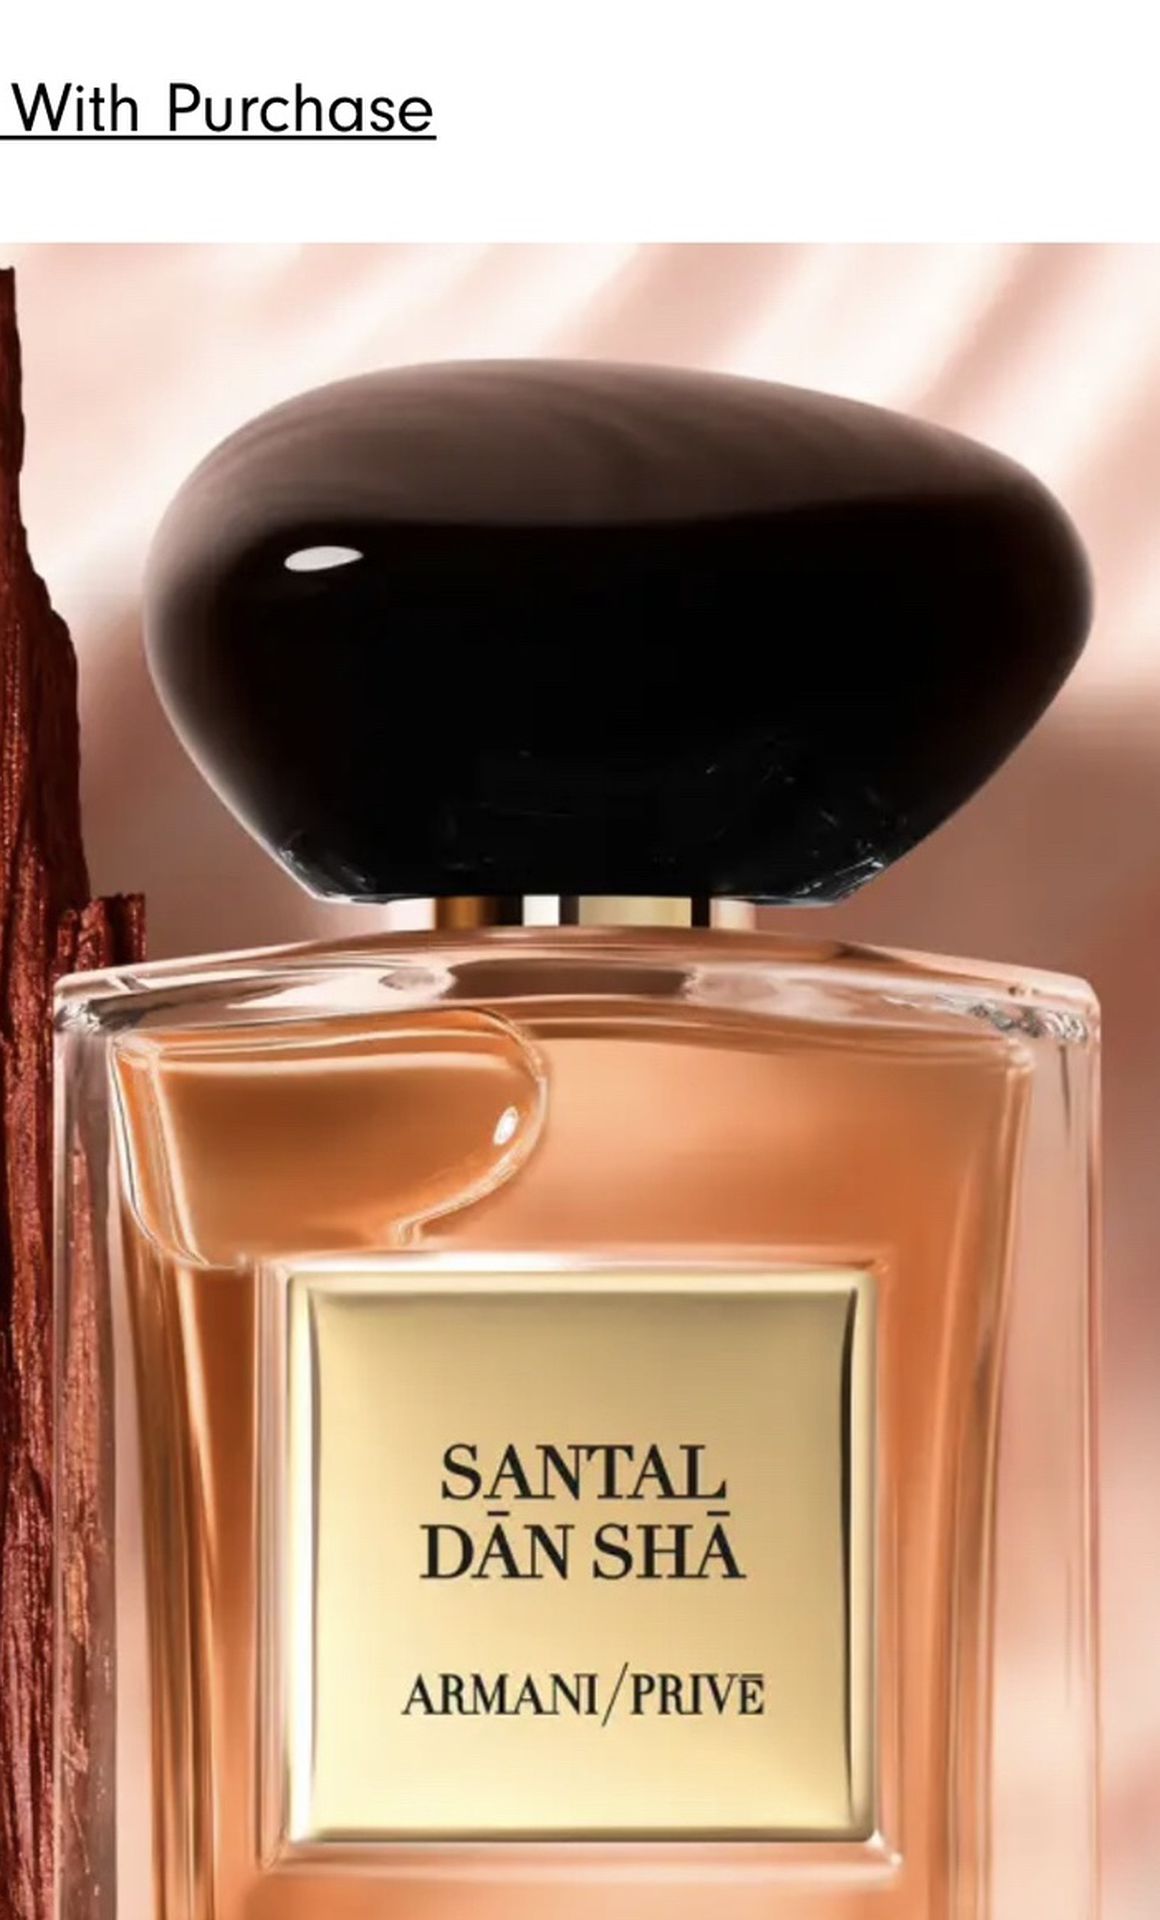 BRAND NEW Santal Dan Sha Perfume